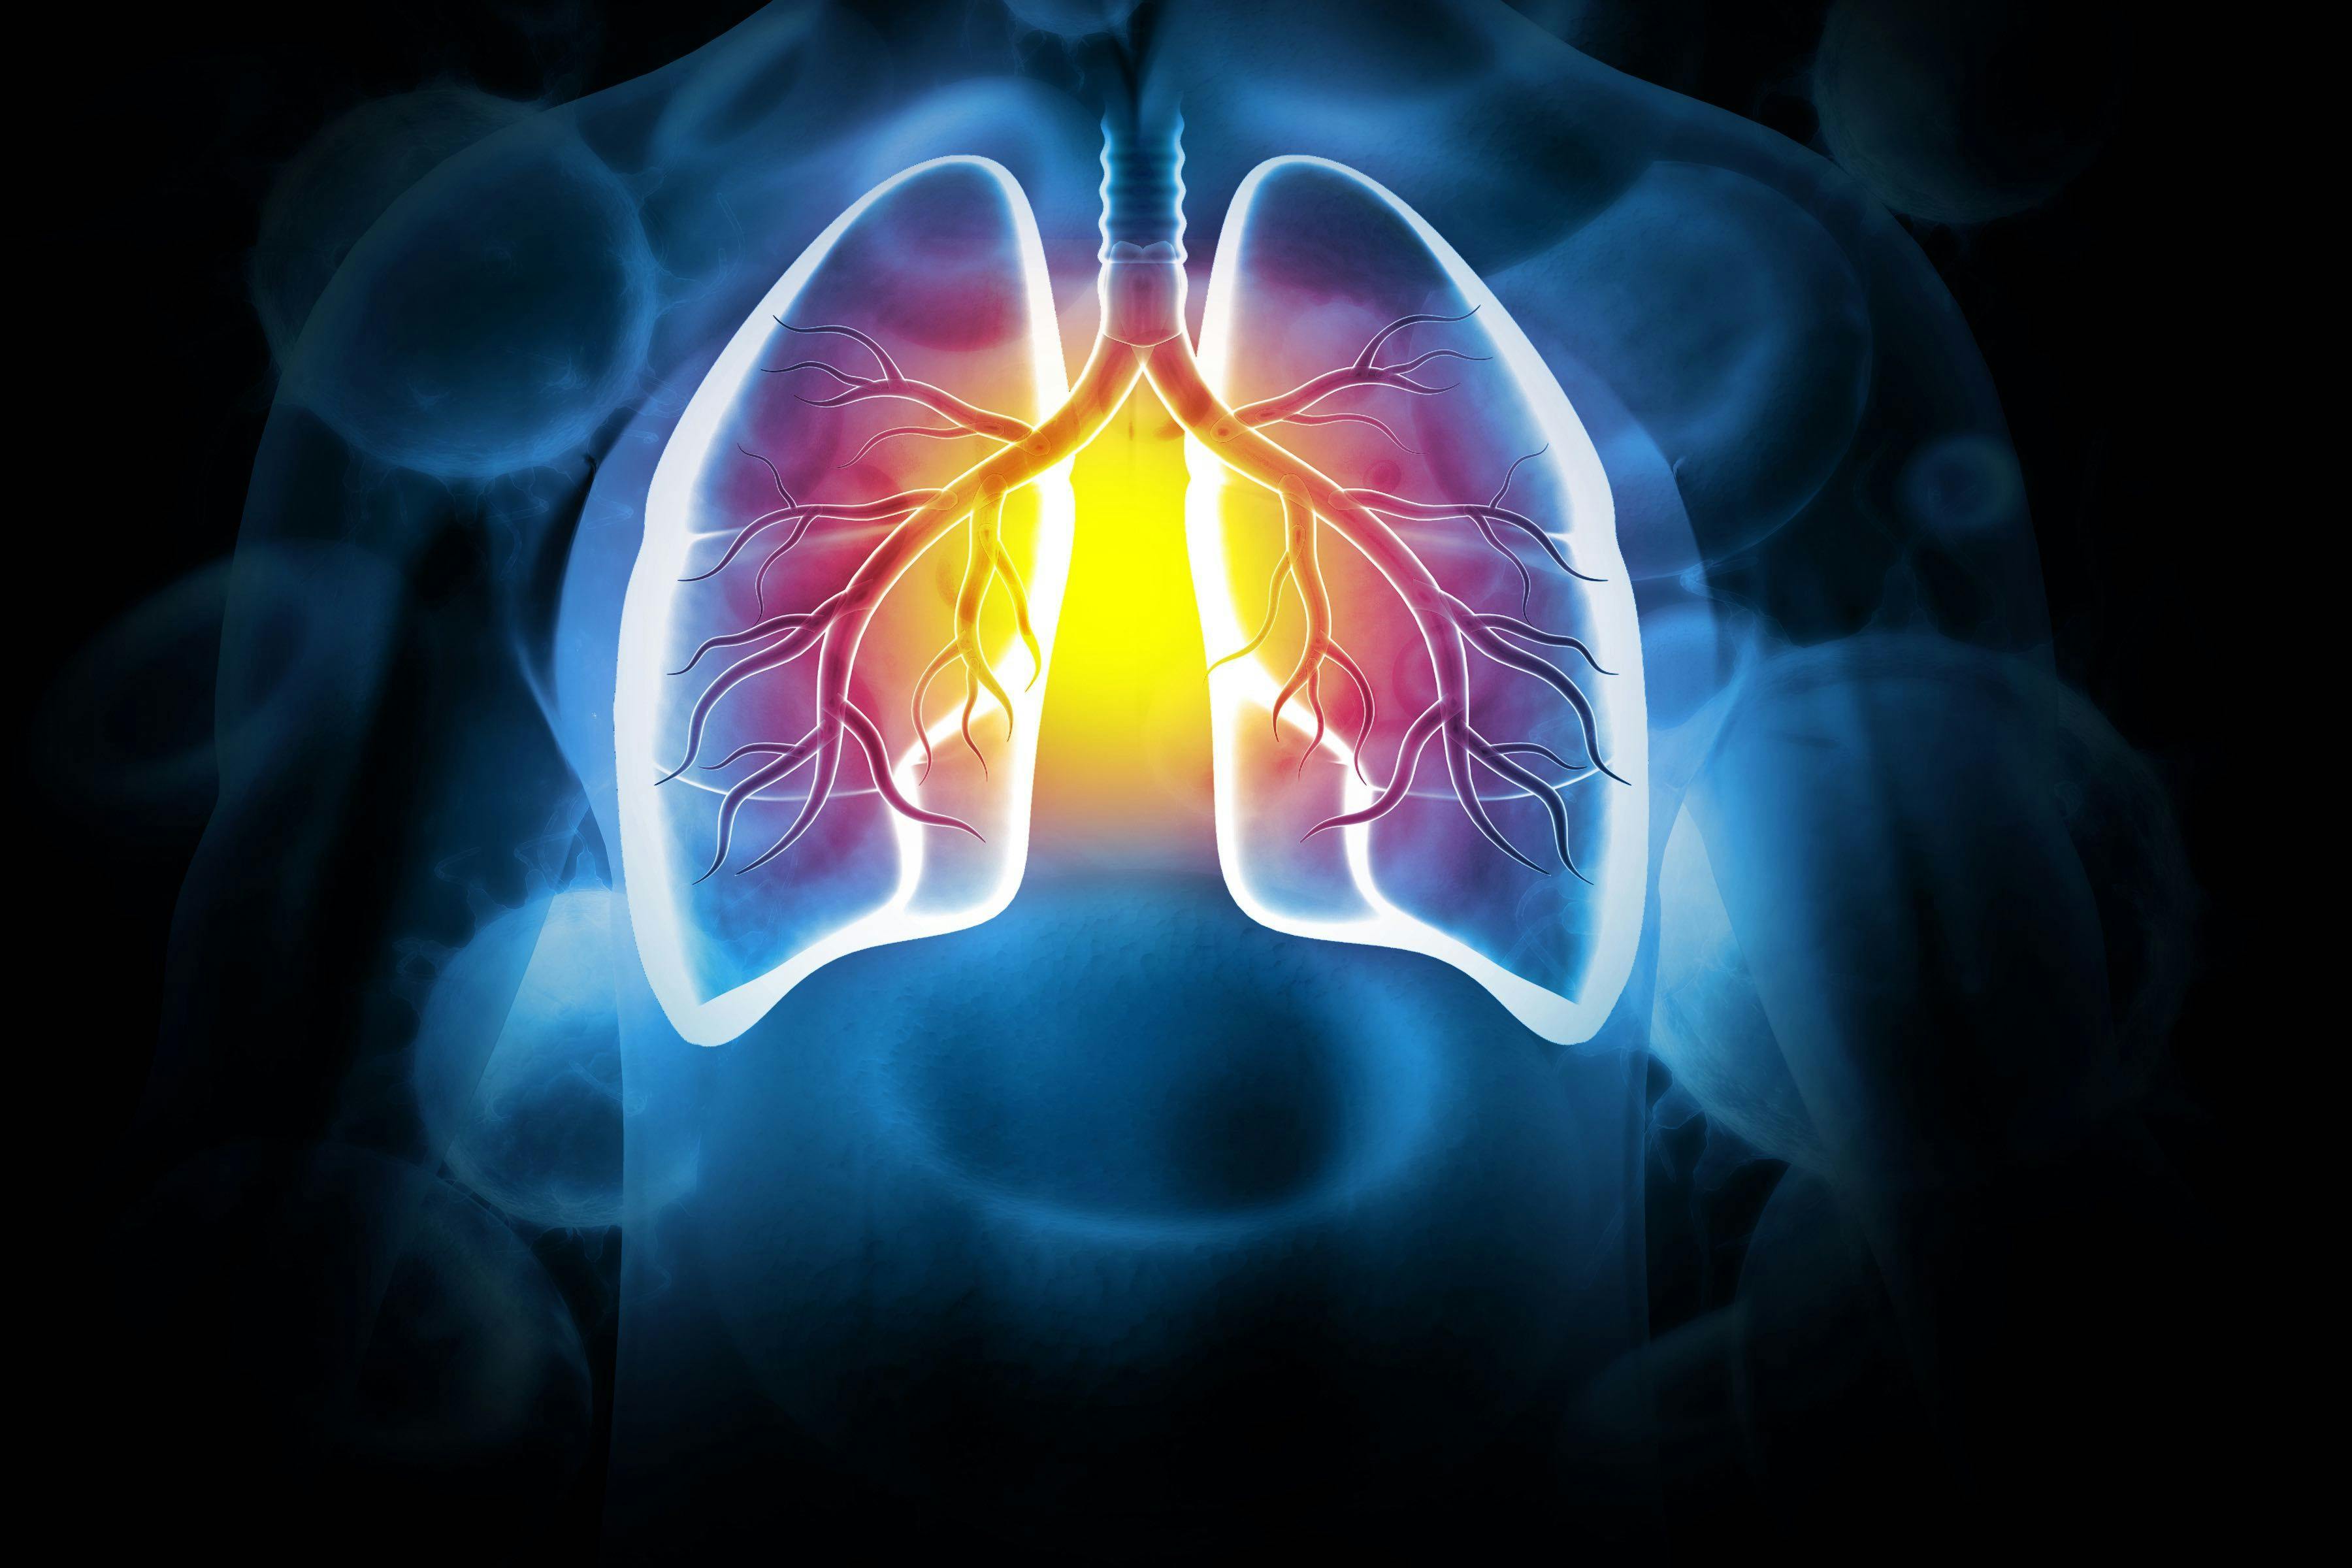 Lungs | Image credit: Crystal light - stock.adobe.com